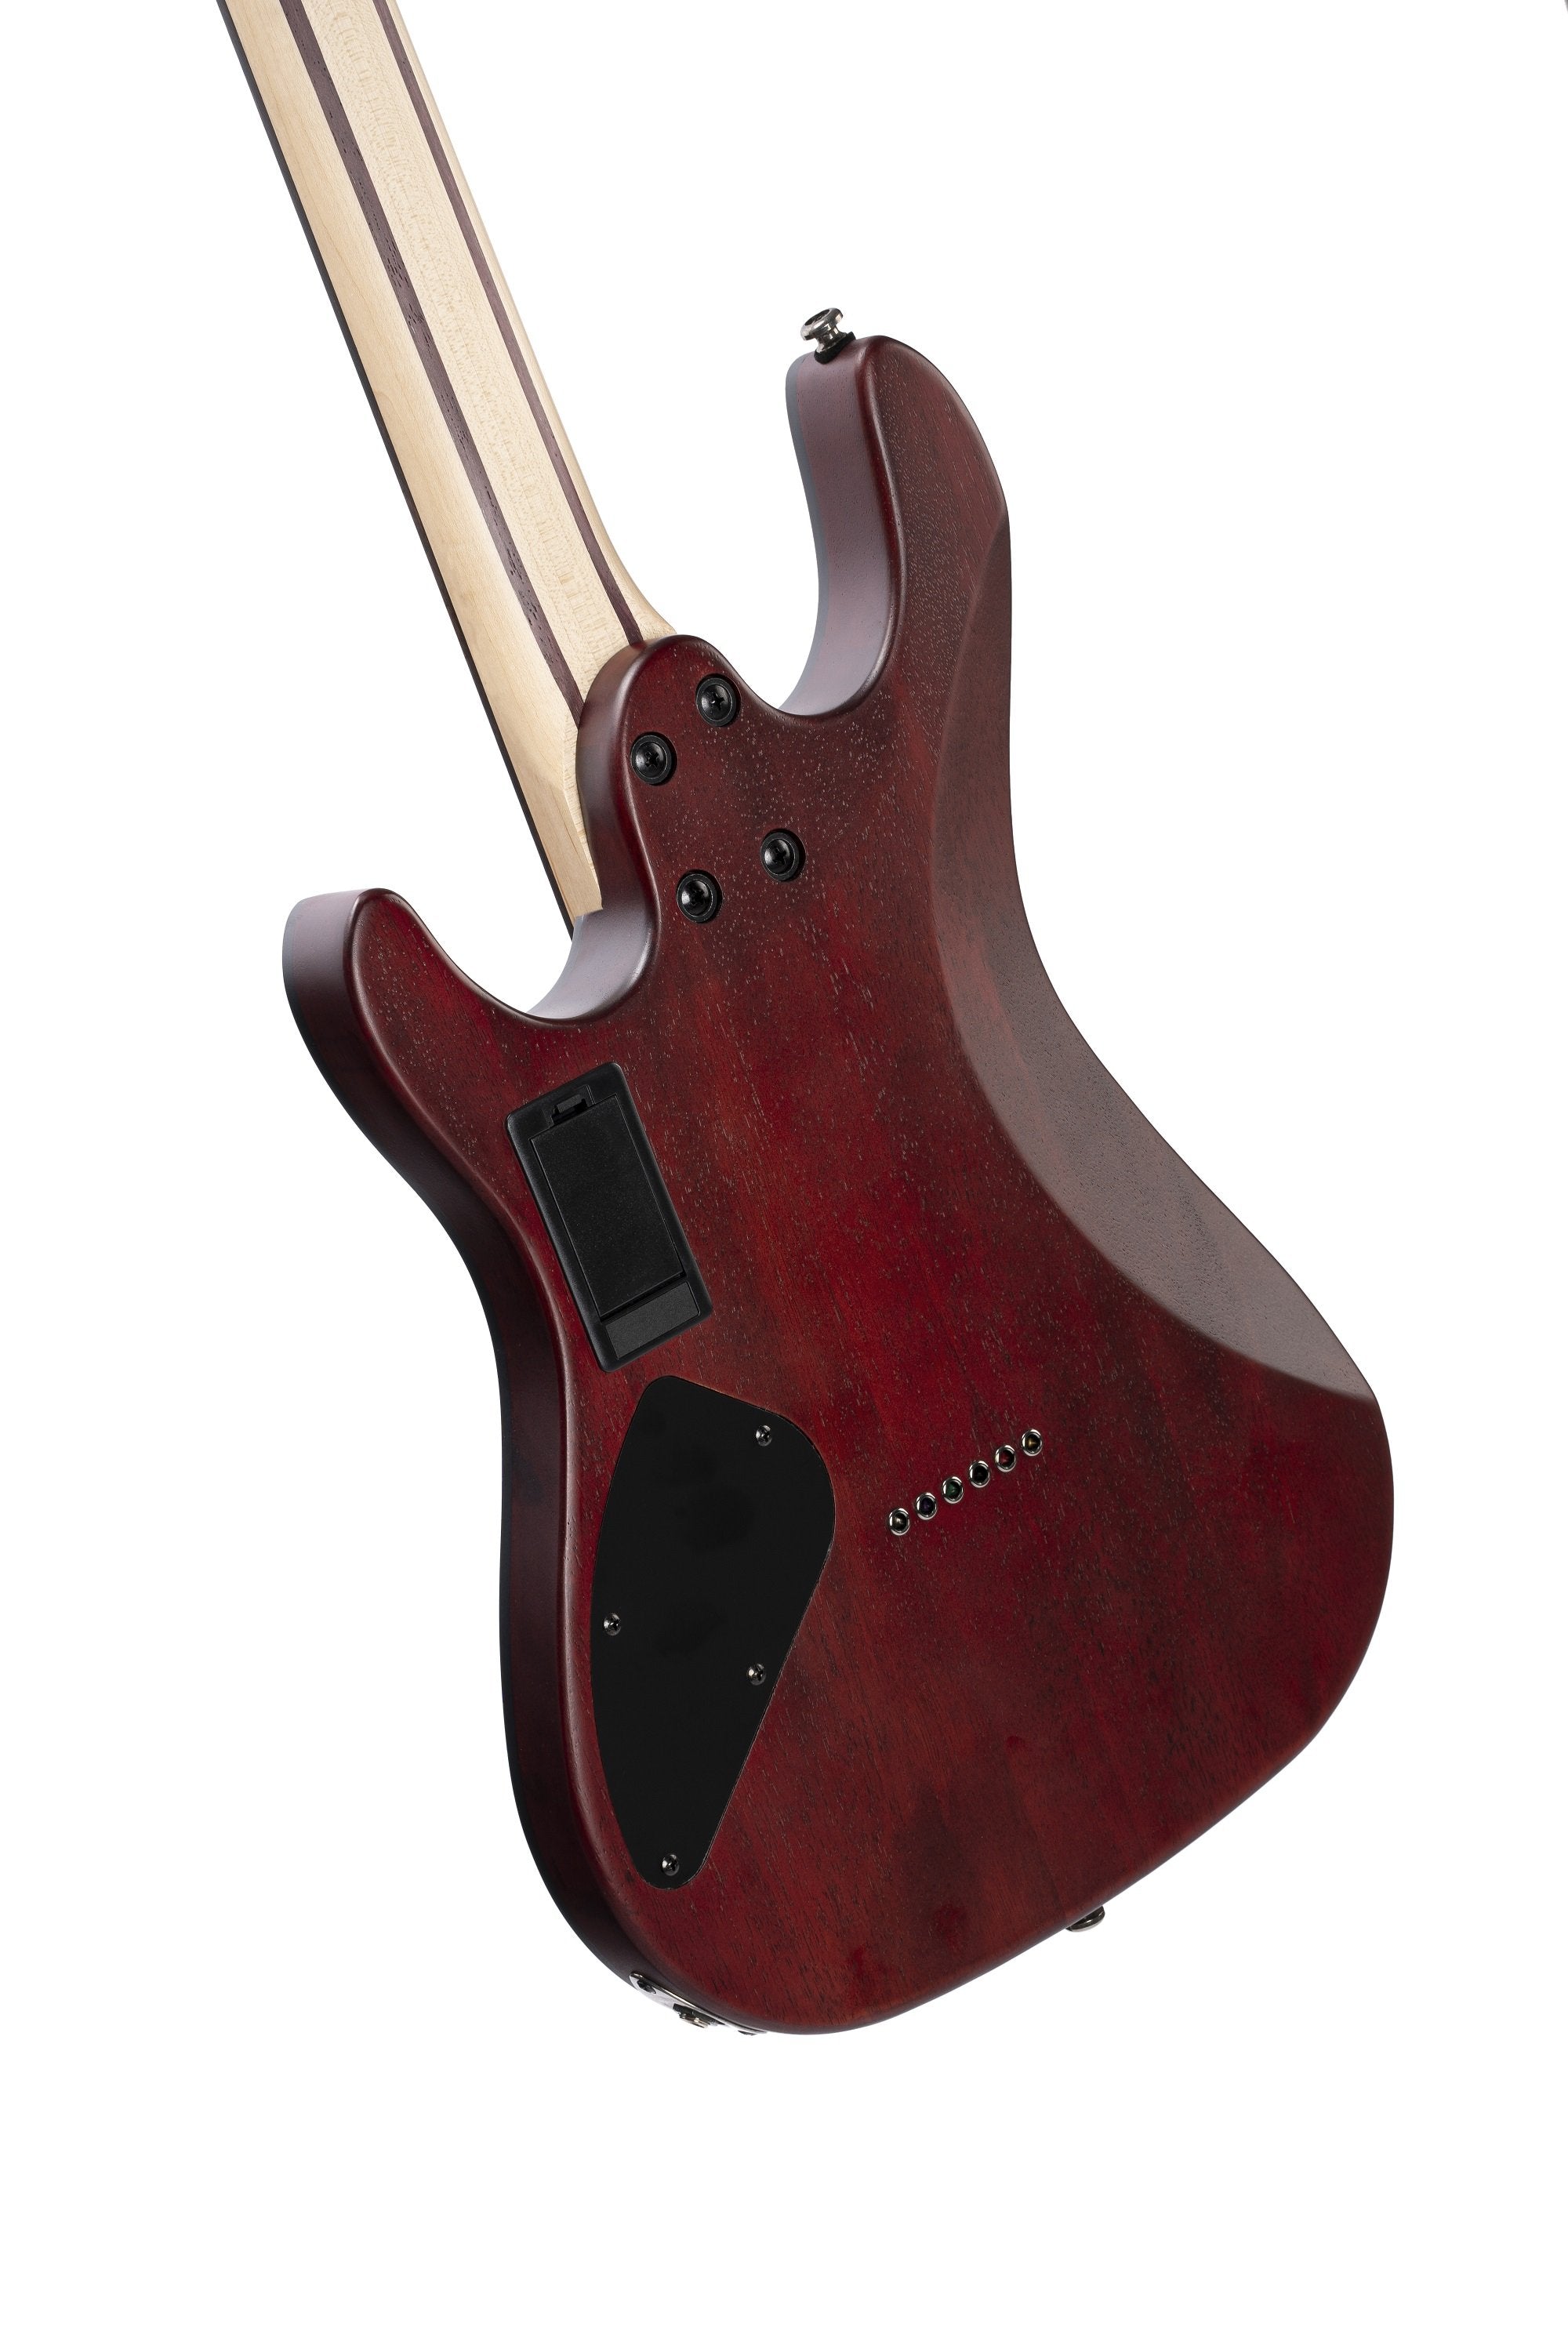 Cort KX500 Etched Deep Violet, Electric Guitar for sale at Richards Guitars.